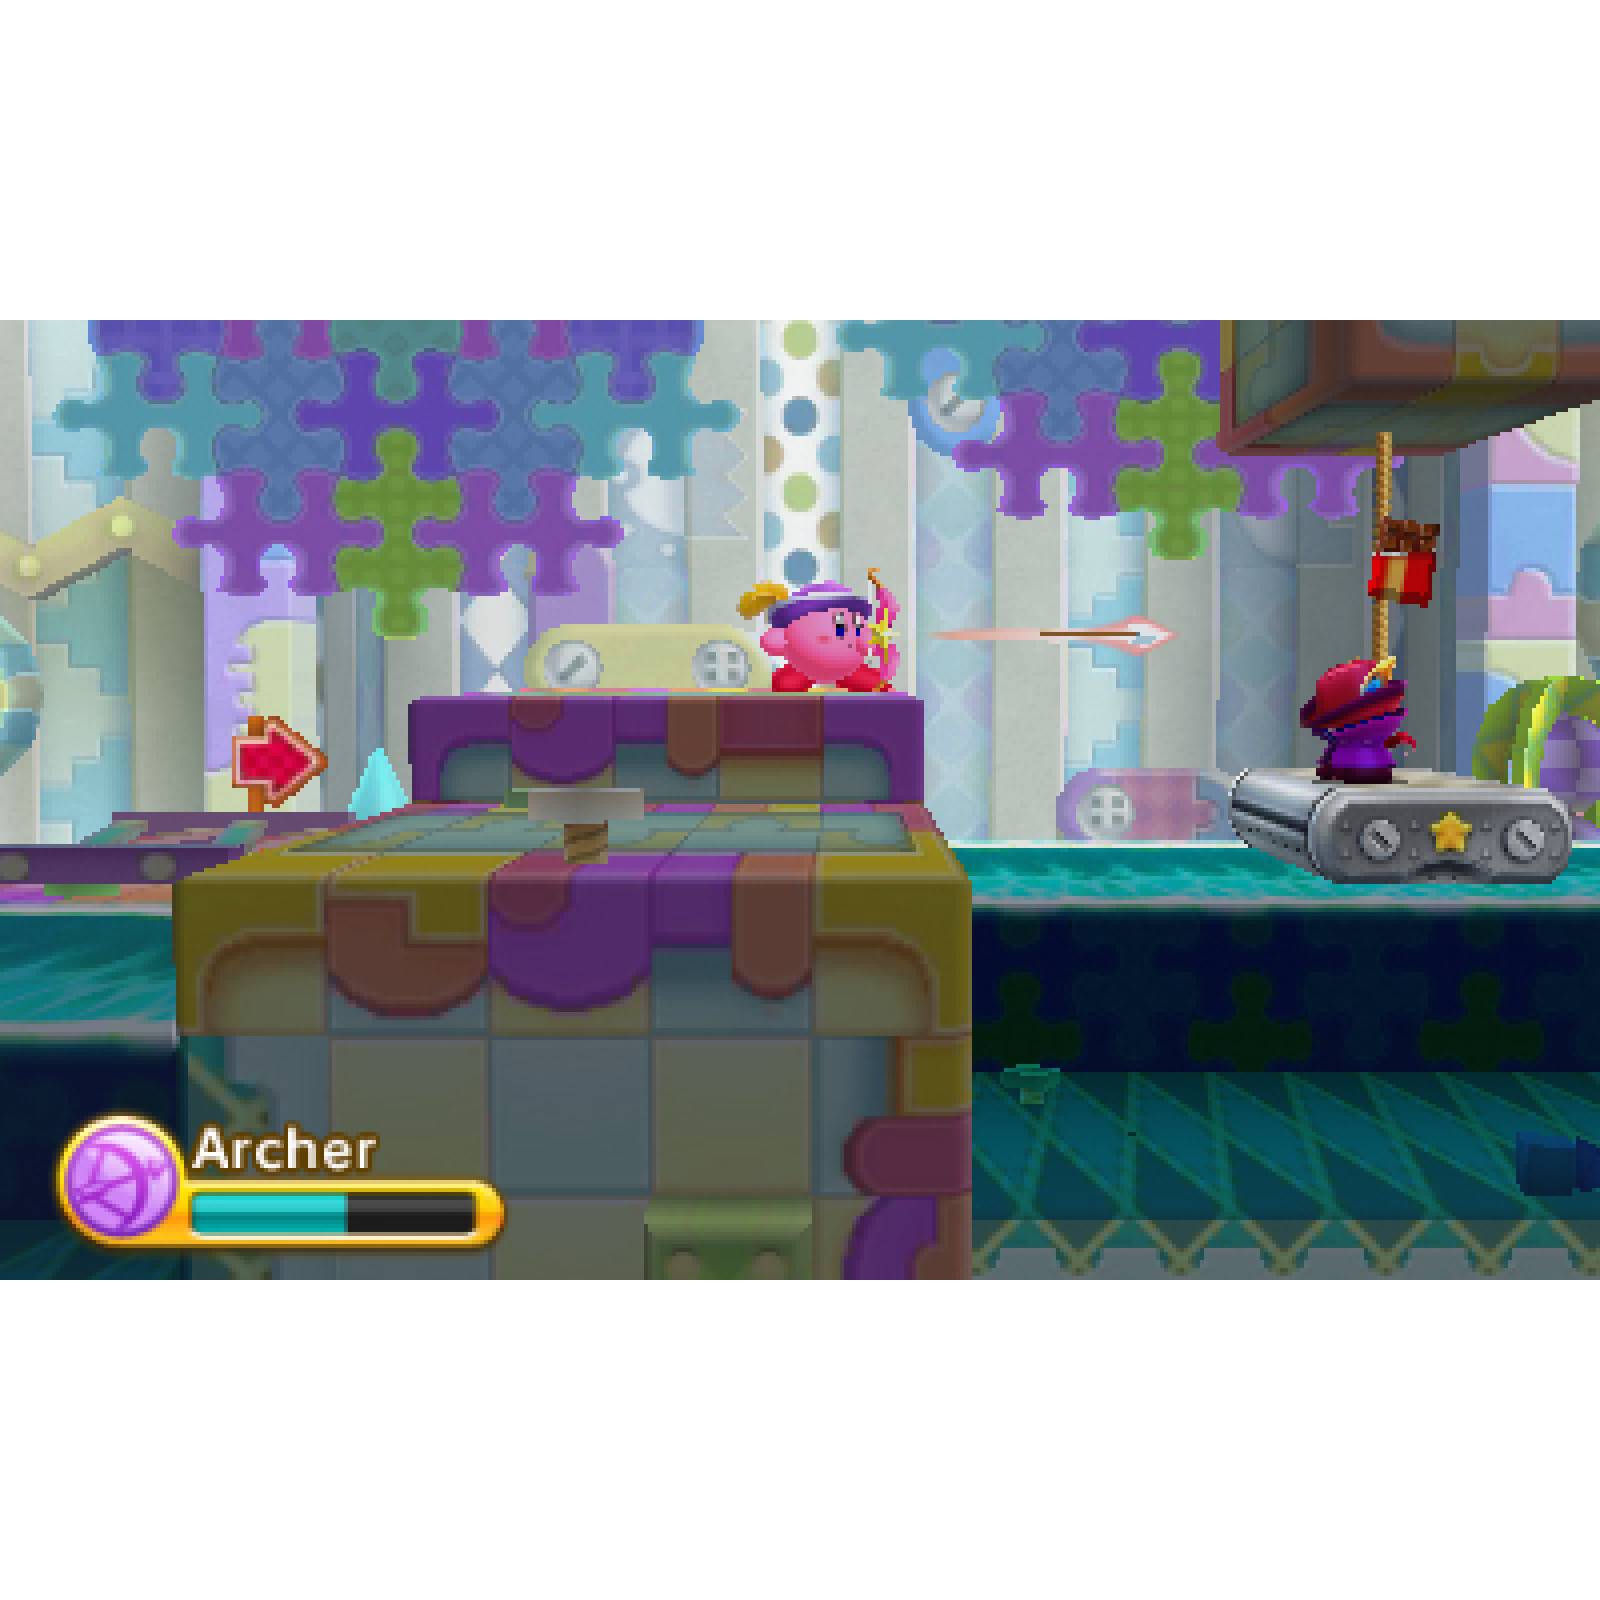 Videojuego Kirby Triple Deluxe Nintendo 3DS Nintendo